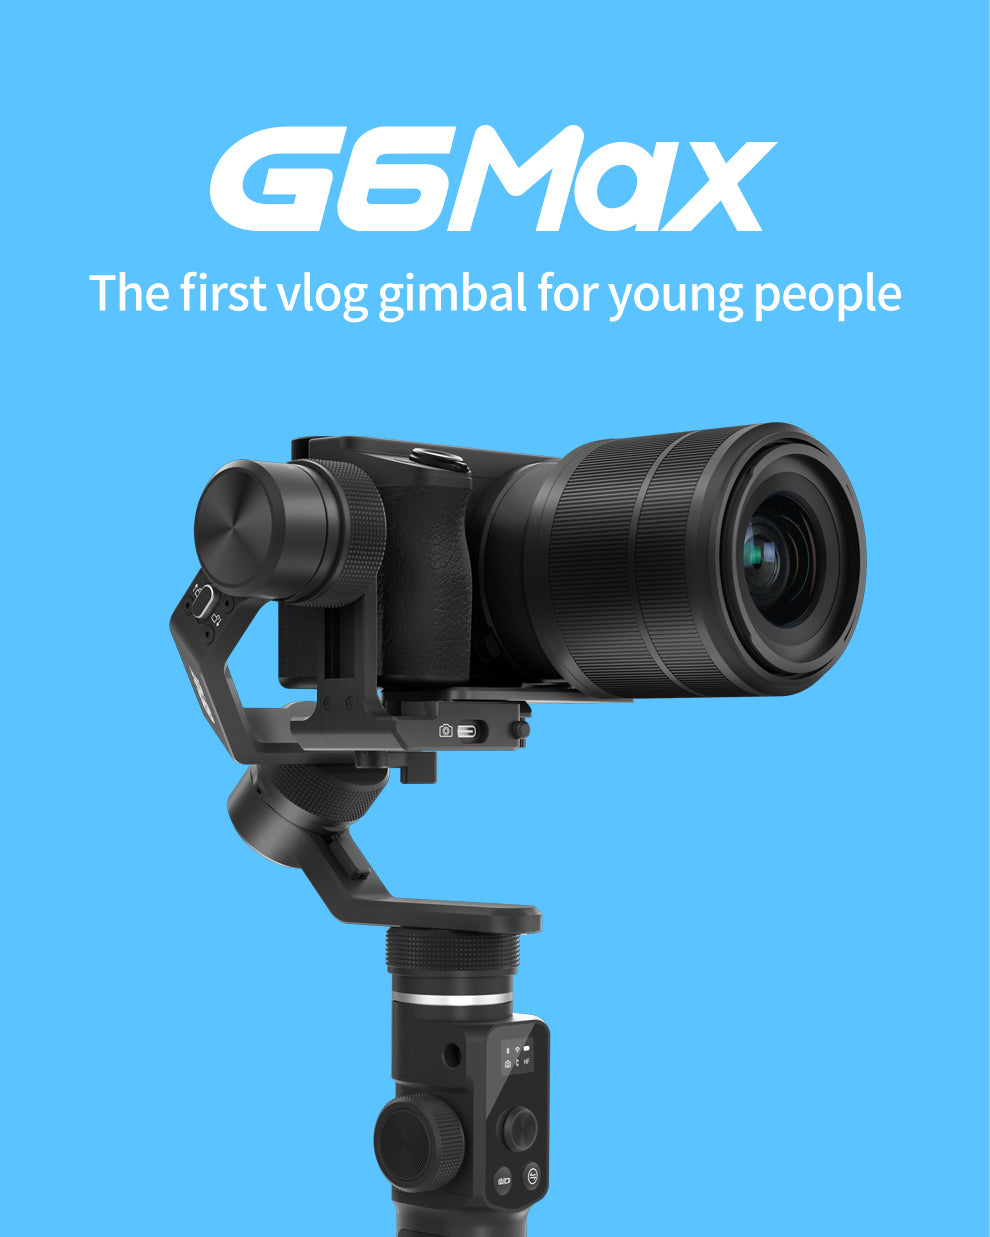 Feiyu G6 Max Gimbal Overview